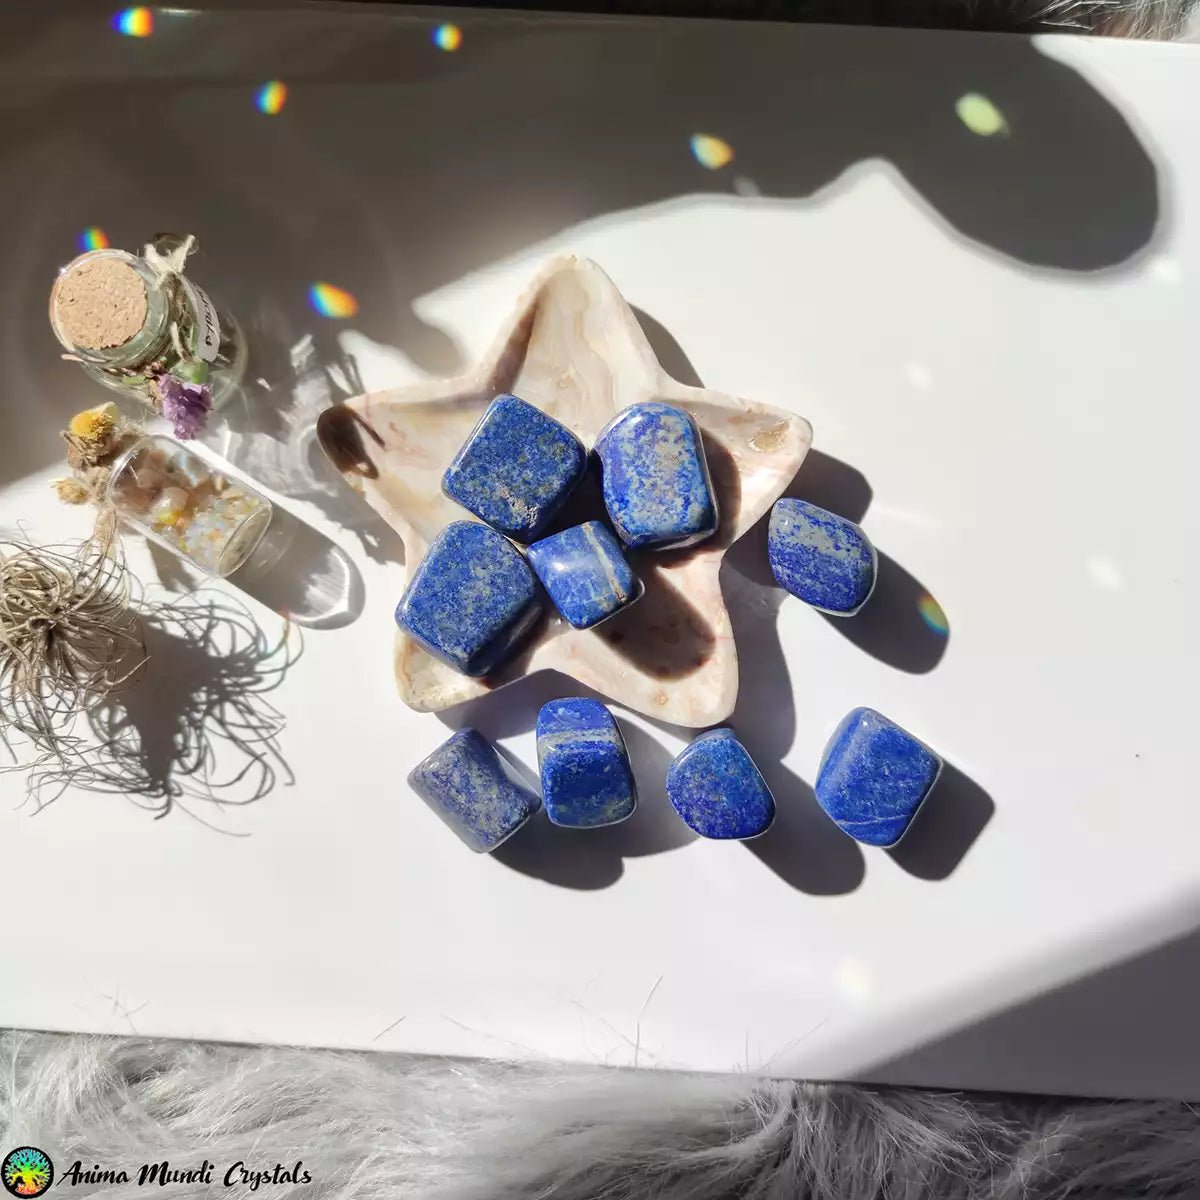 1x Tumbled Lapis Lazuli - Anima Mundi Crystals